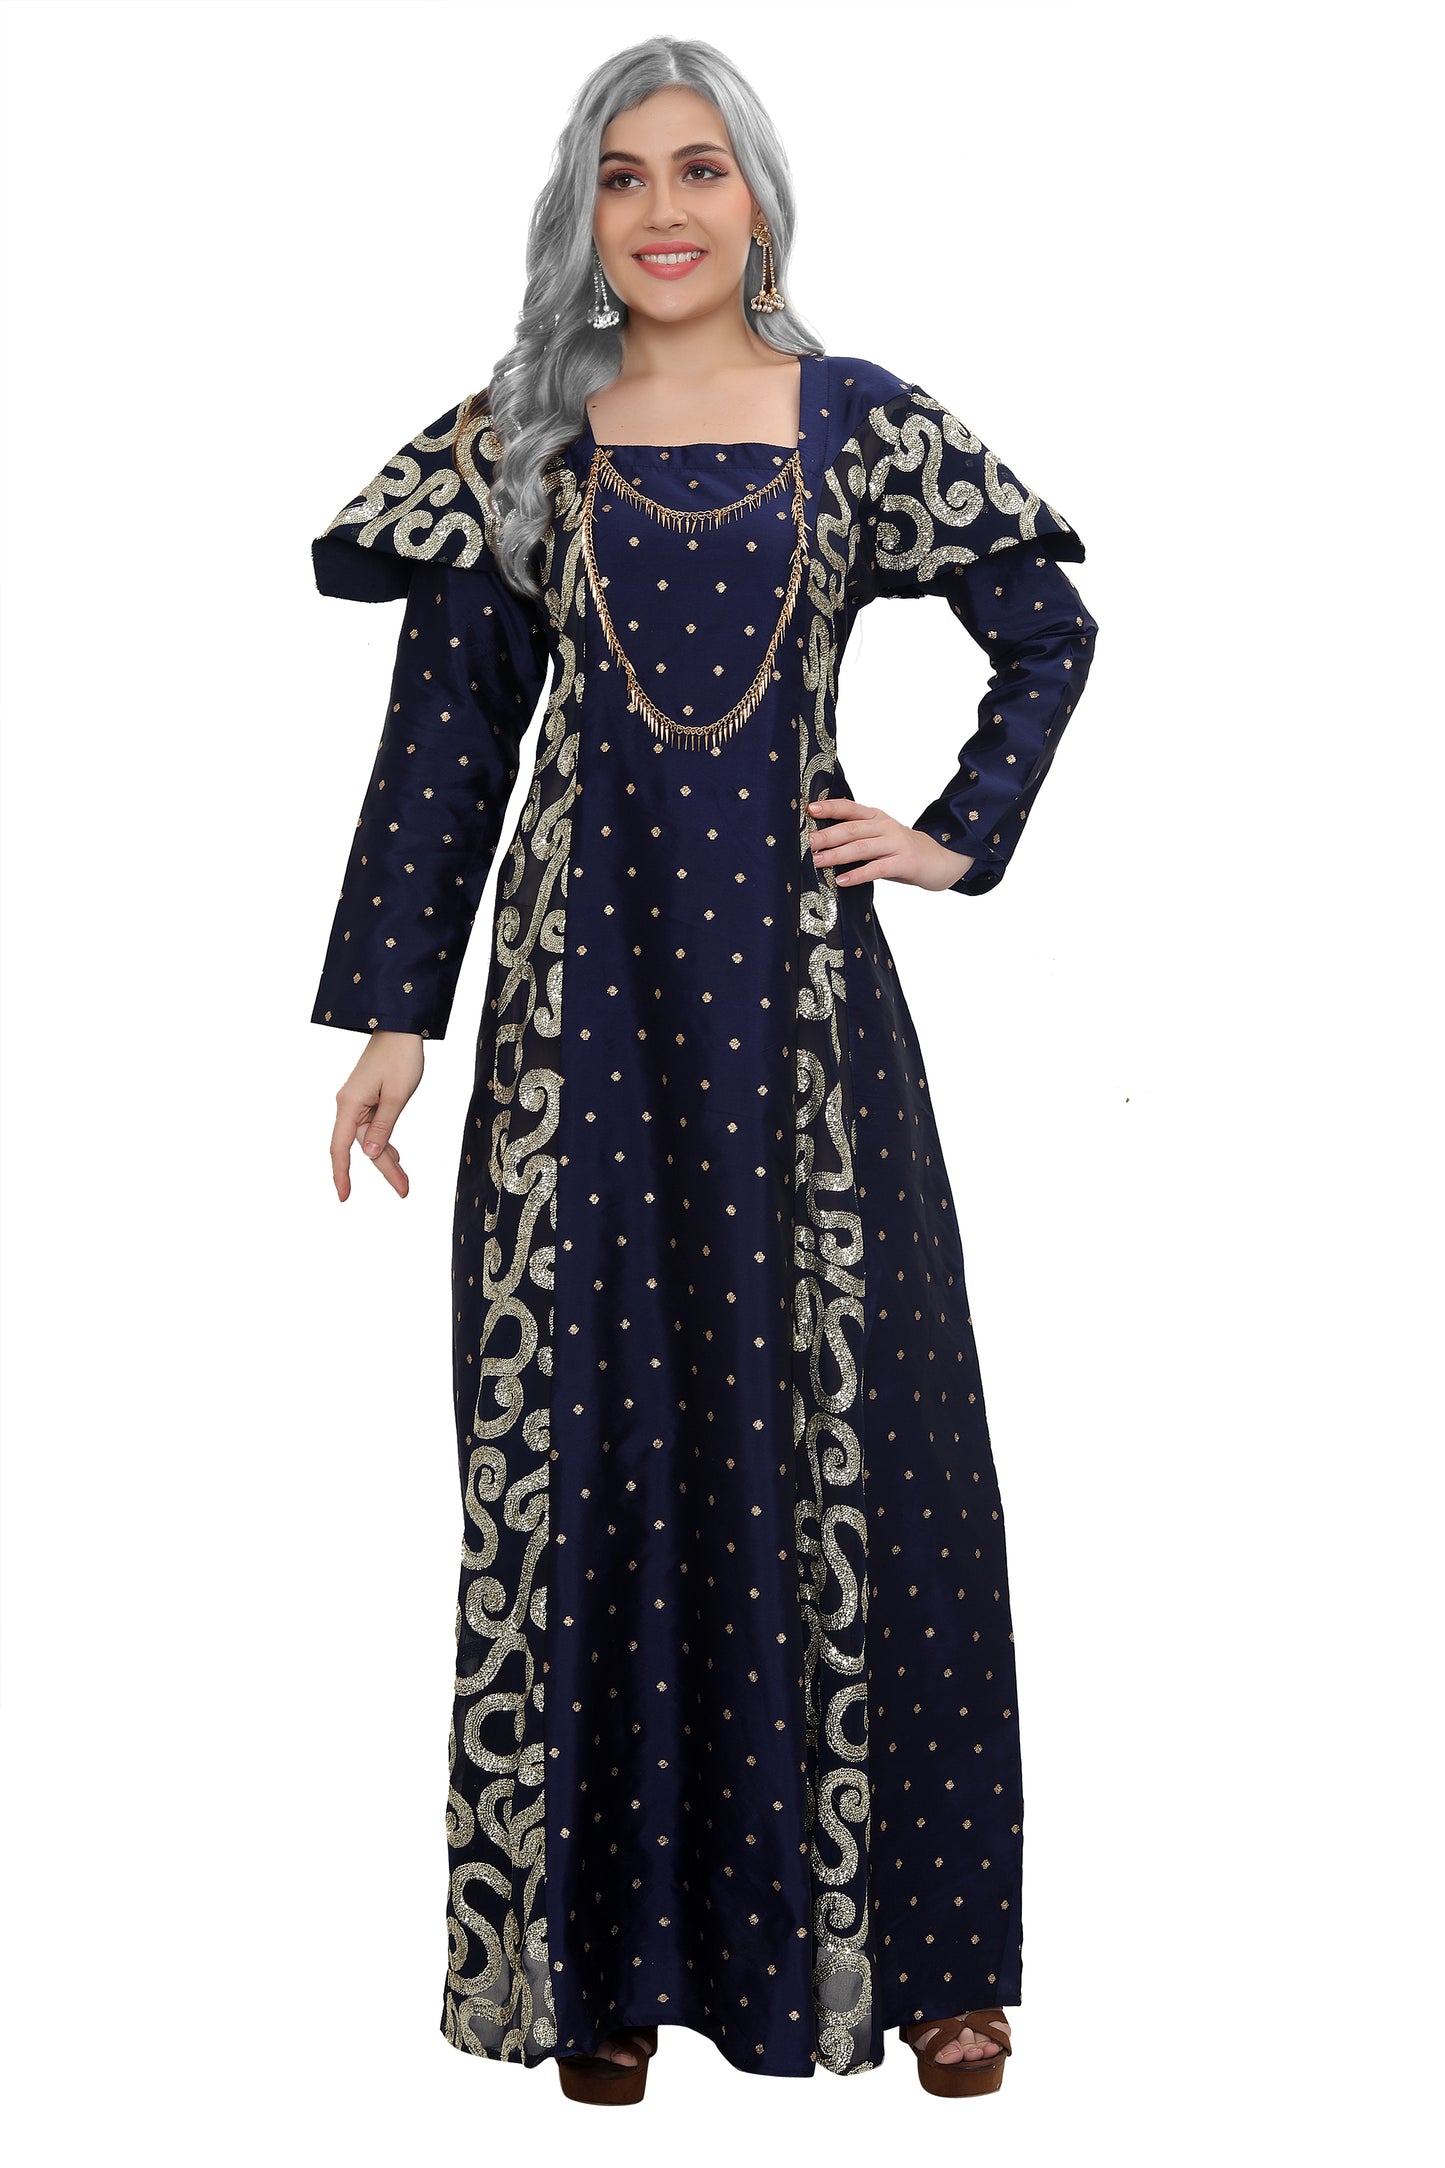 Medieval Princess Dress Costume Dragonstone Game of Thrones Series - Maxim Creation